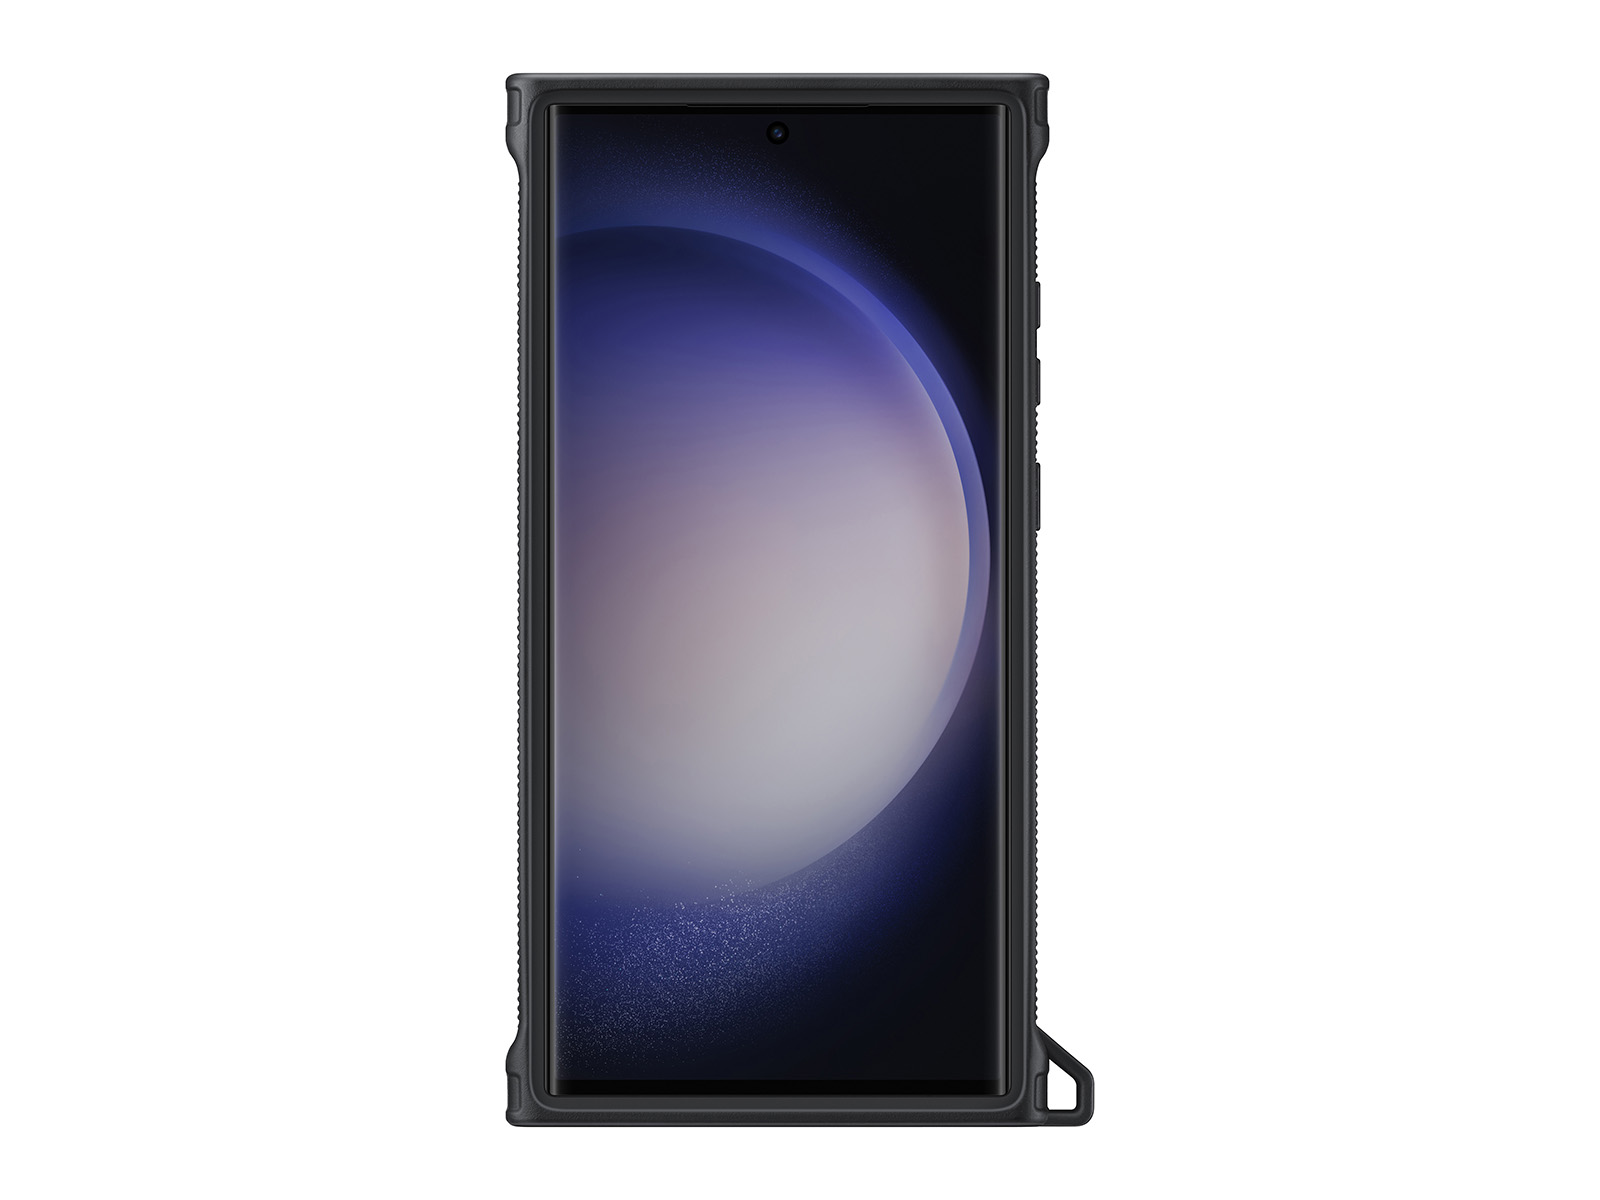 Protector de Pantalla Star-Case Titan Plus para iPhone 7 Plus